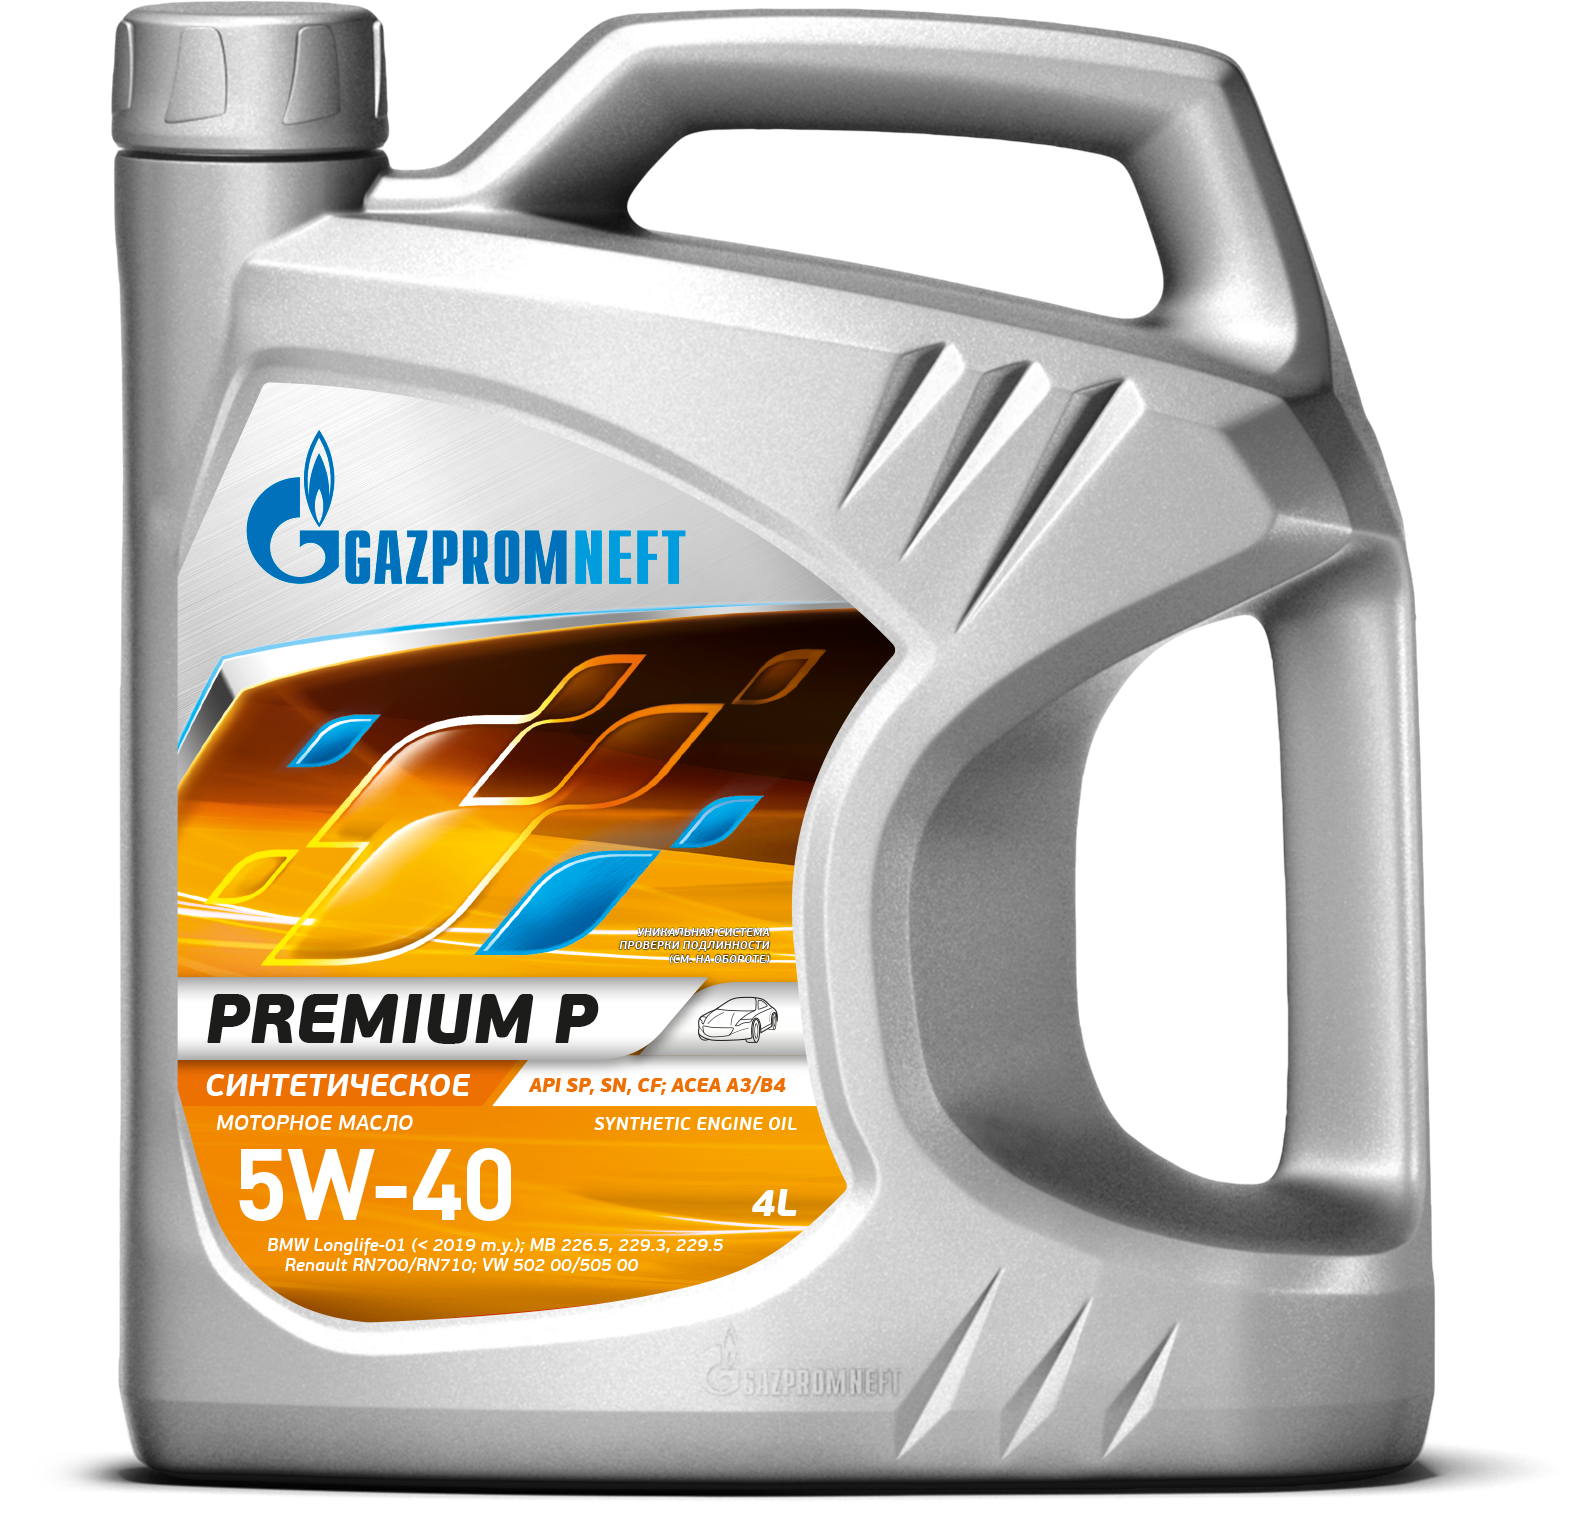 Масло Моторное Gazpromneft Premium P 5W-40 Синтетическое 4 Л 253140703 Gazpromneft арт. 253140703